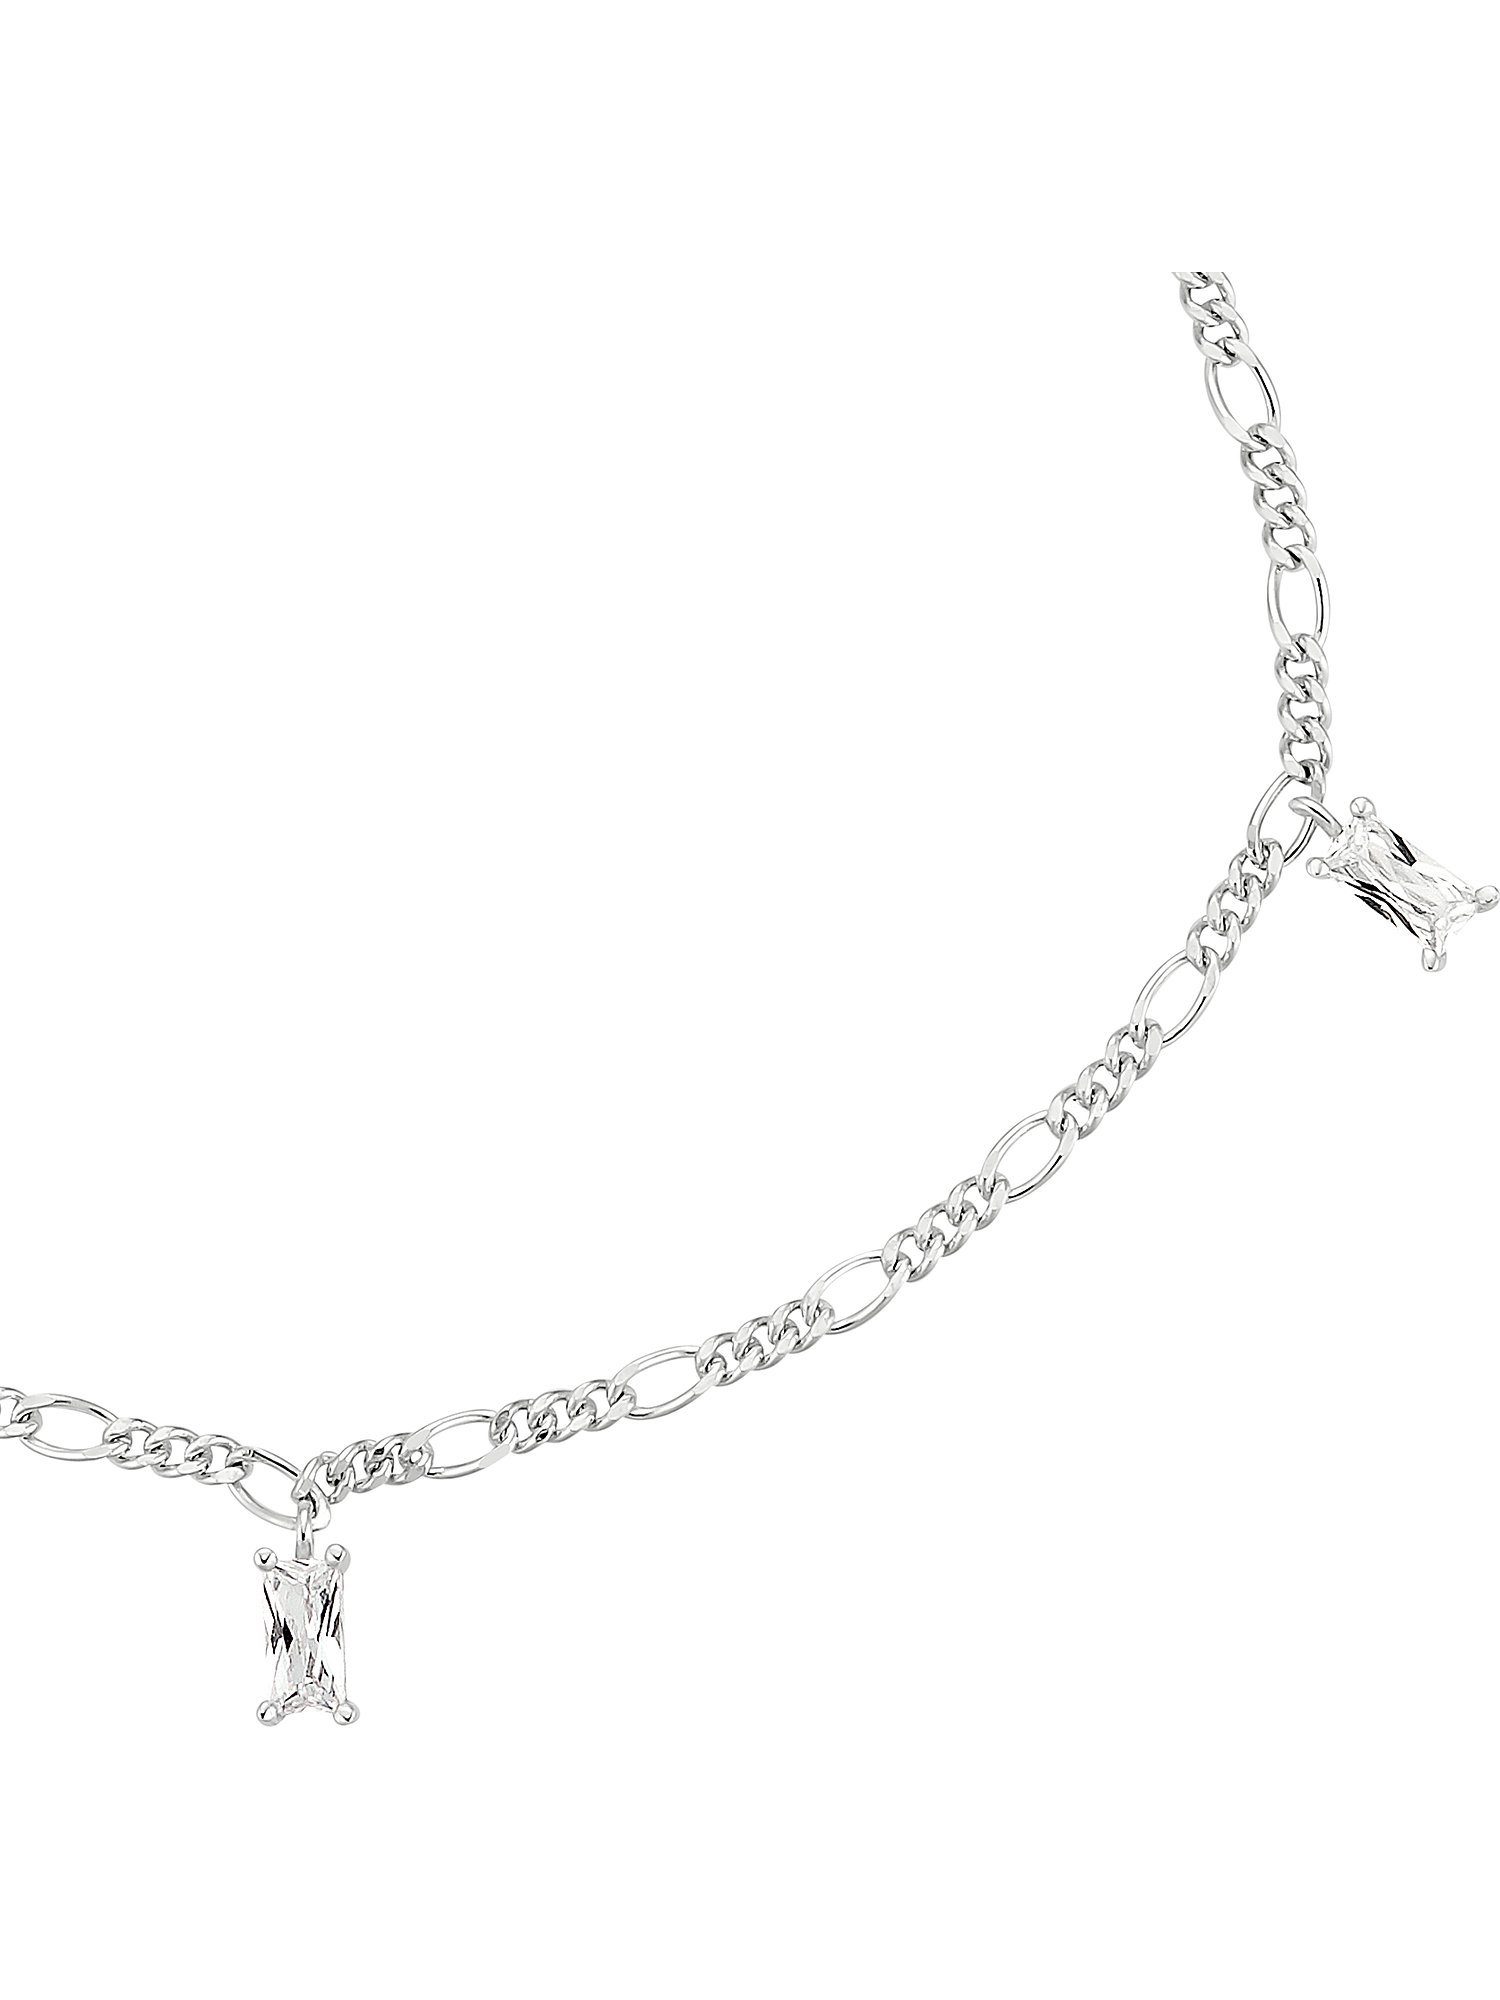 Noelani Armband Zirkonia, Noelani 925er modern 3 Damen-Armband Silber